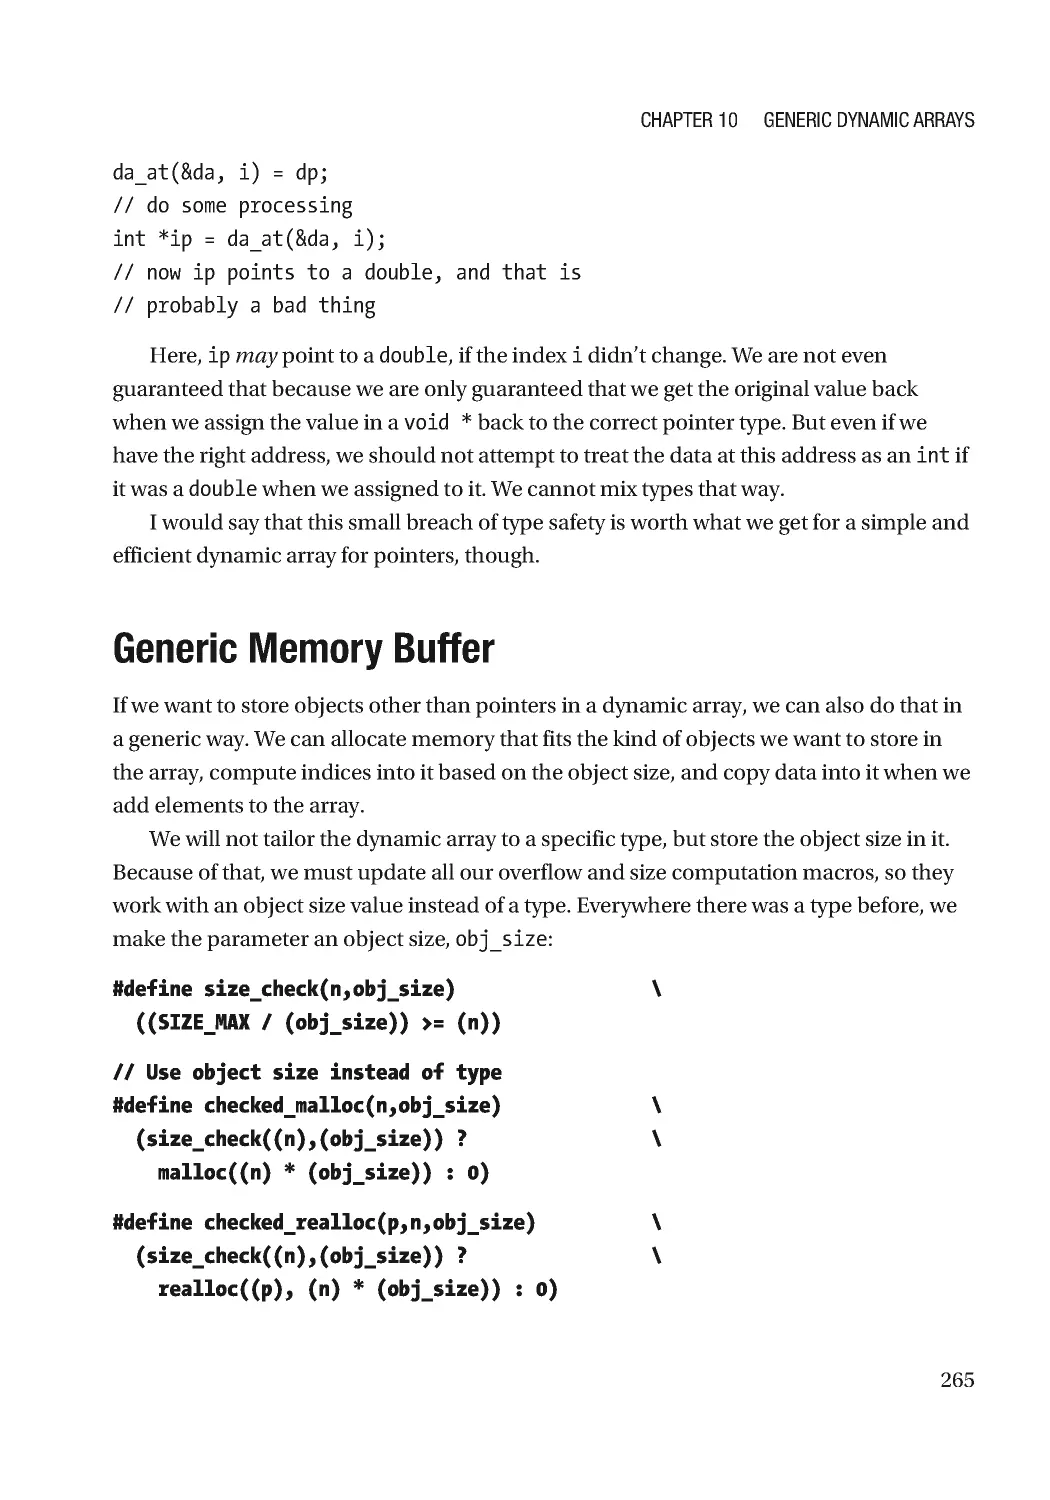 Generic Memory Buffer